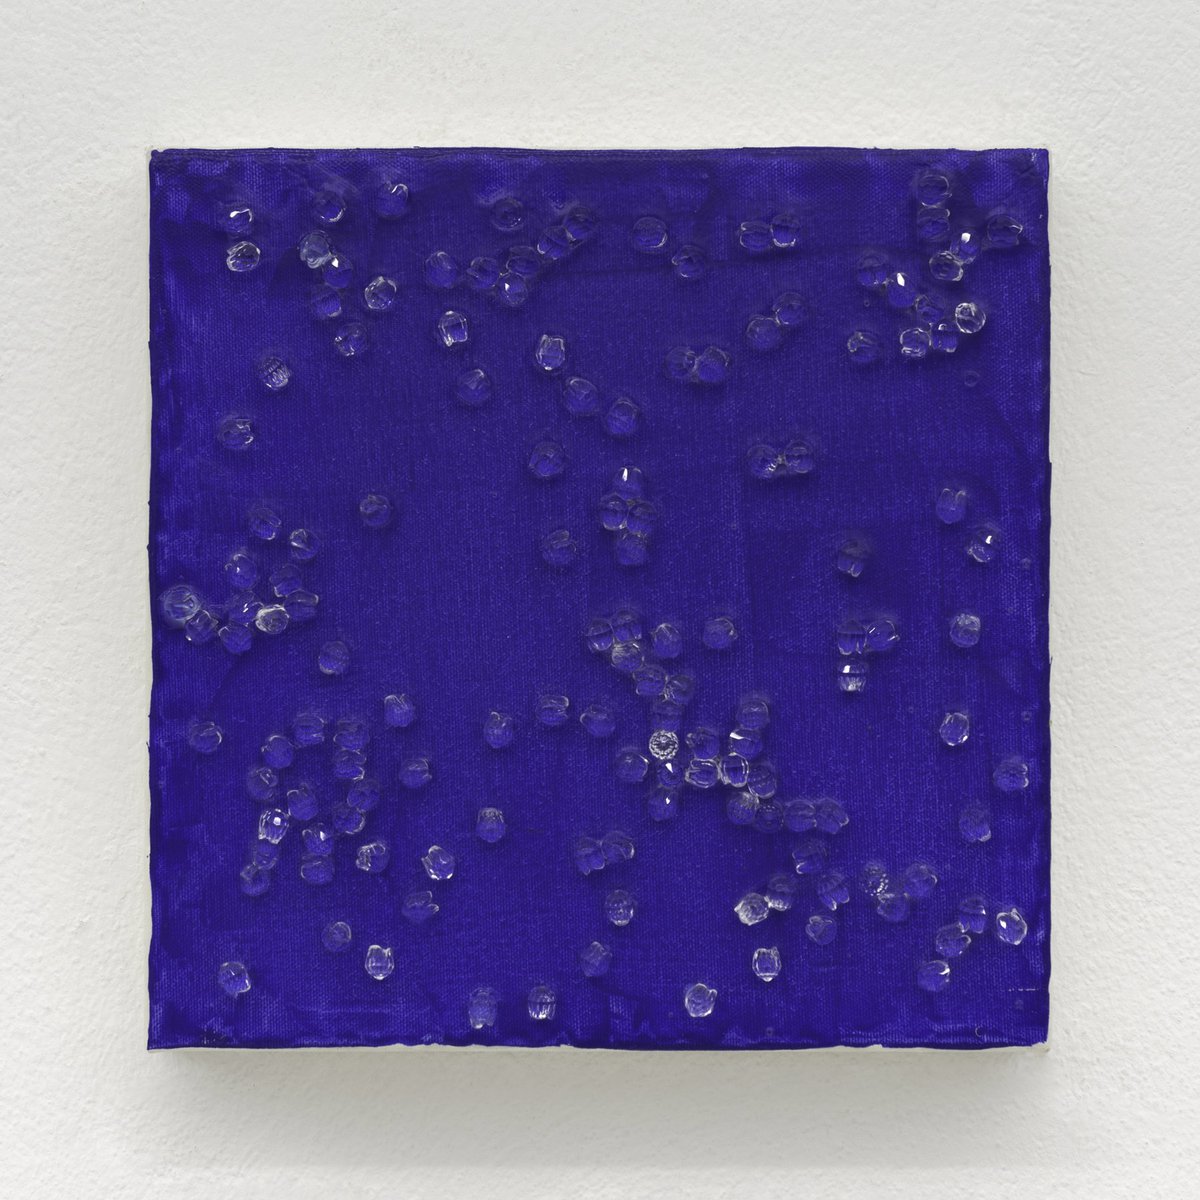 Heimo ZobernigUntitled, 2010Swarovski round stones, crystal, acrylic binder, acrylic on canvas30 x 30 cm